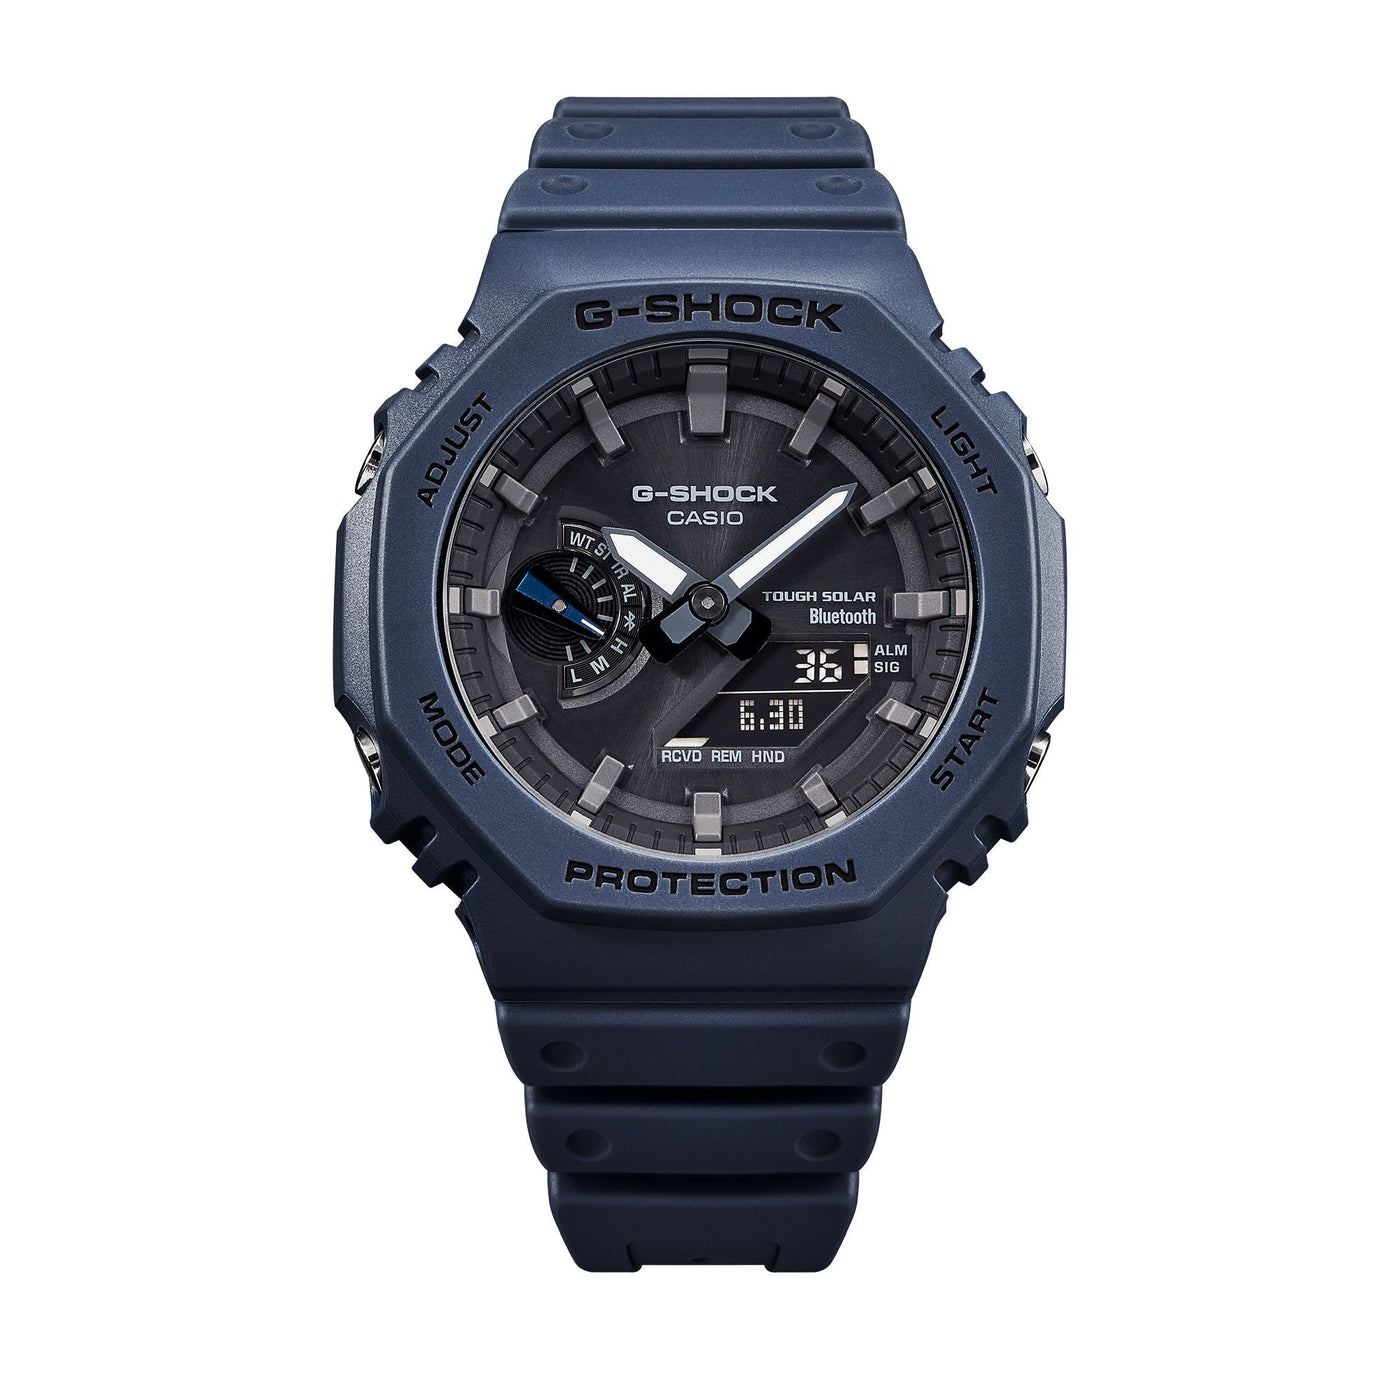 Orologio G-Shock blu GA-B2100-2AER a carica solare e bluetooth